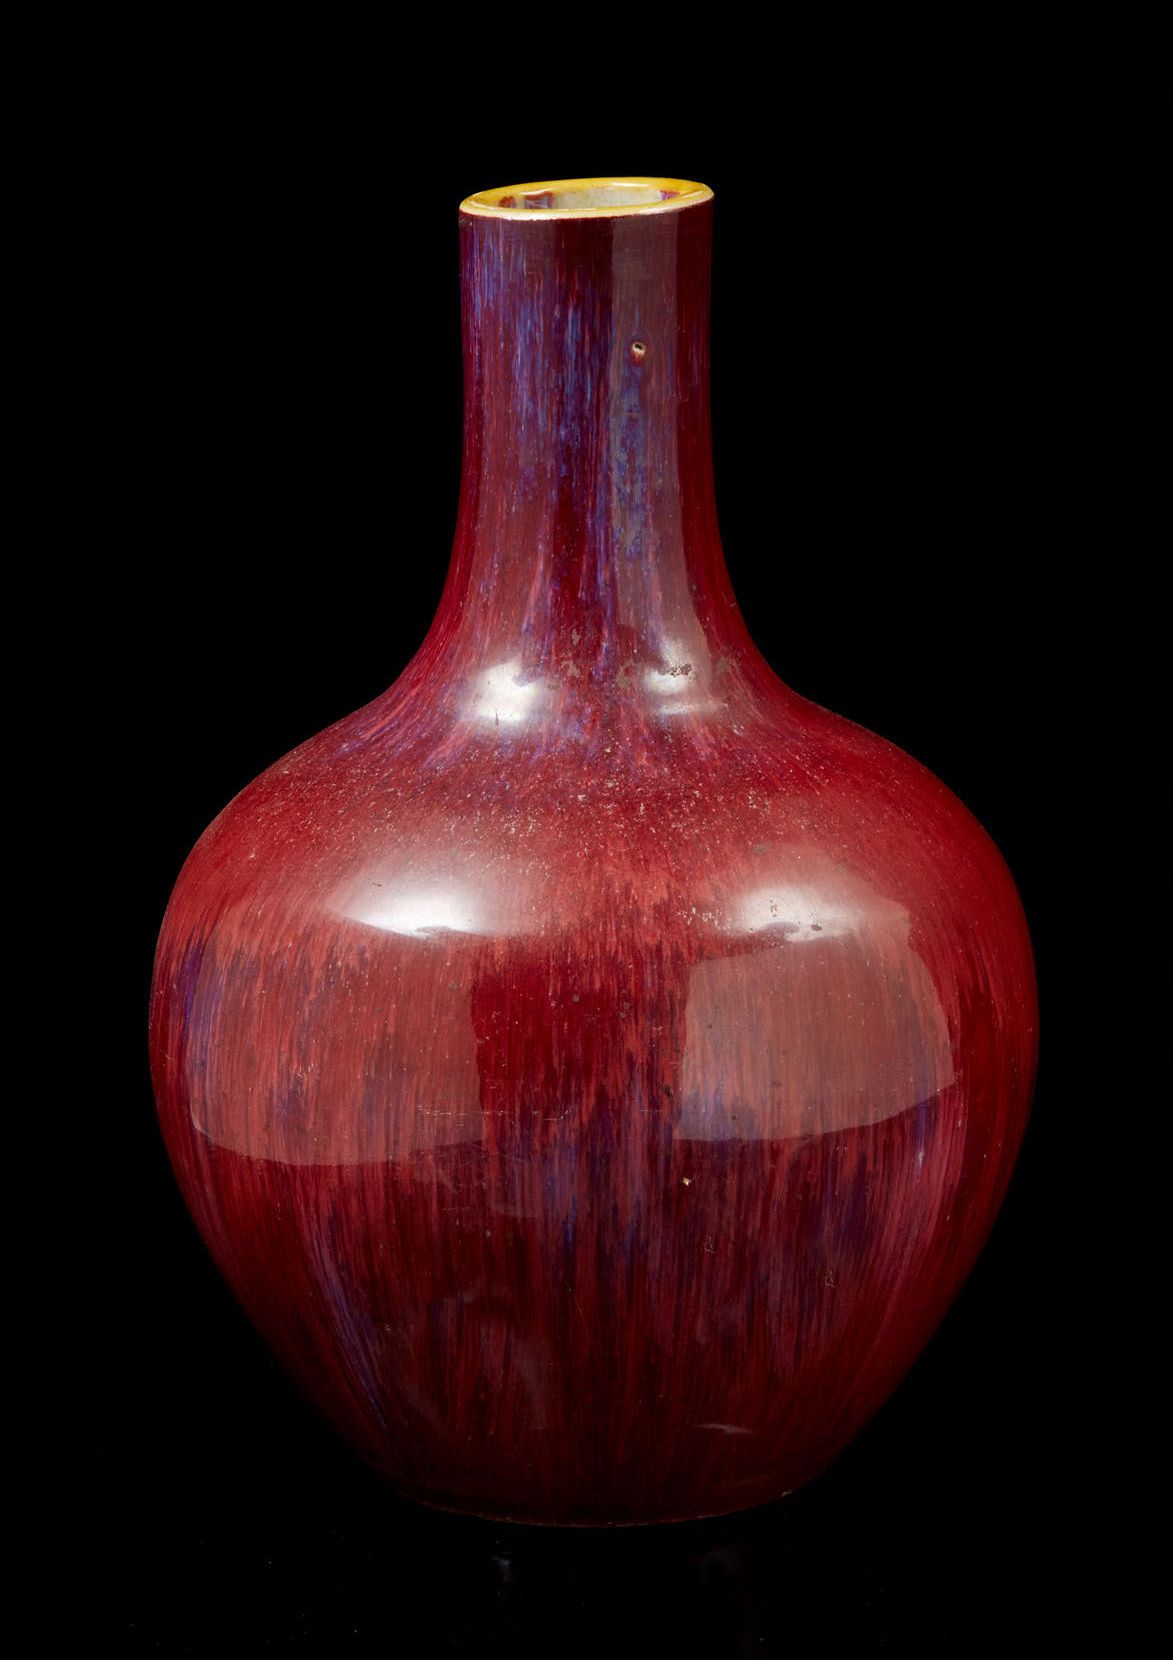 CHINE, fin XIXe siècle 牛血色和茄子色火焰釉瓷器长颈天秋坪花瓶。(缩短的脖子和穿孔的底部)。
H.35厘米